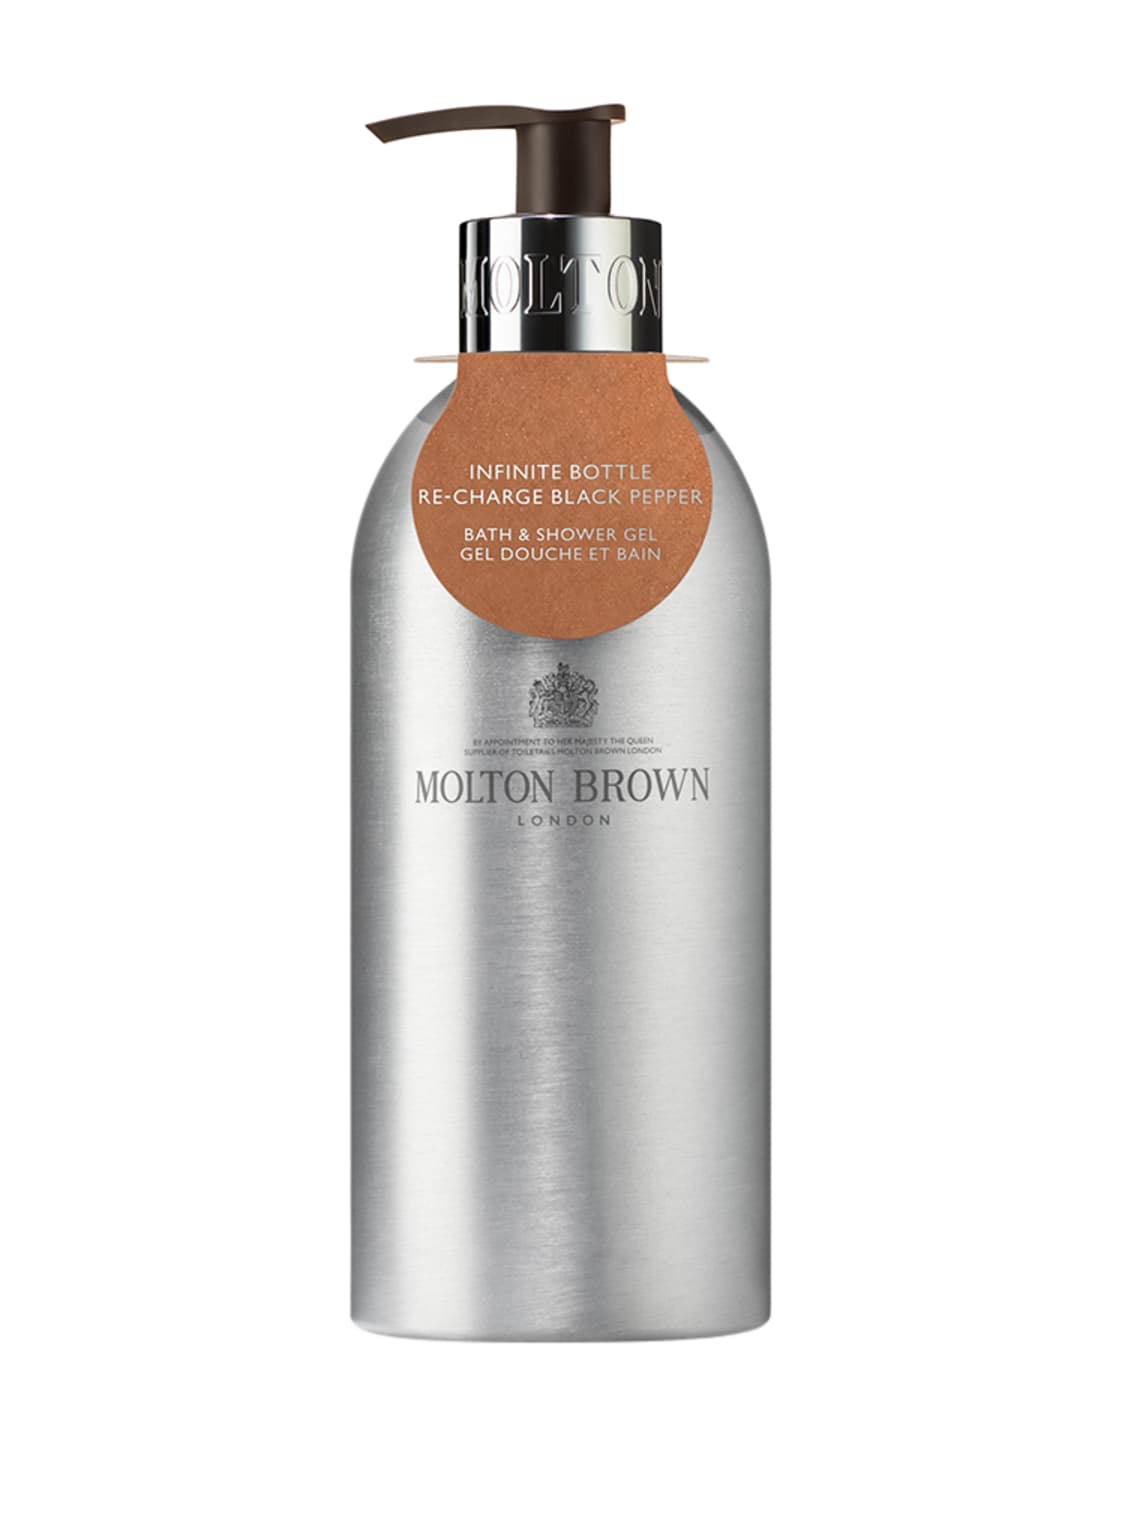 Molton Brown Re-Charge Black Pepper Infinite Bottle Bath & Shower Gel 400 ml von MOLTON BROWN